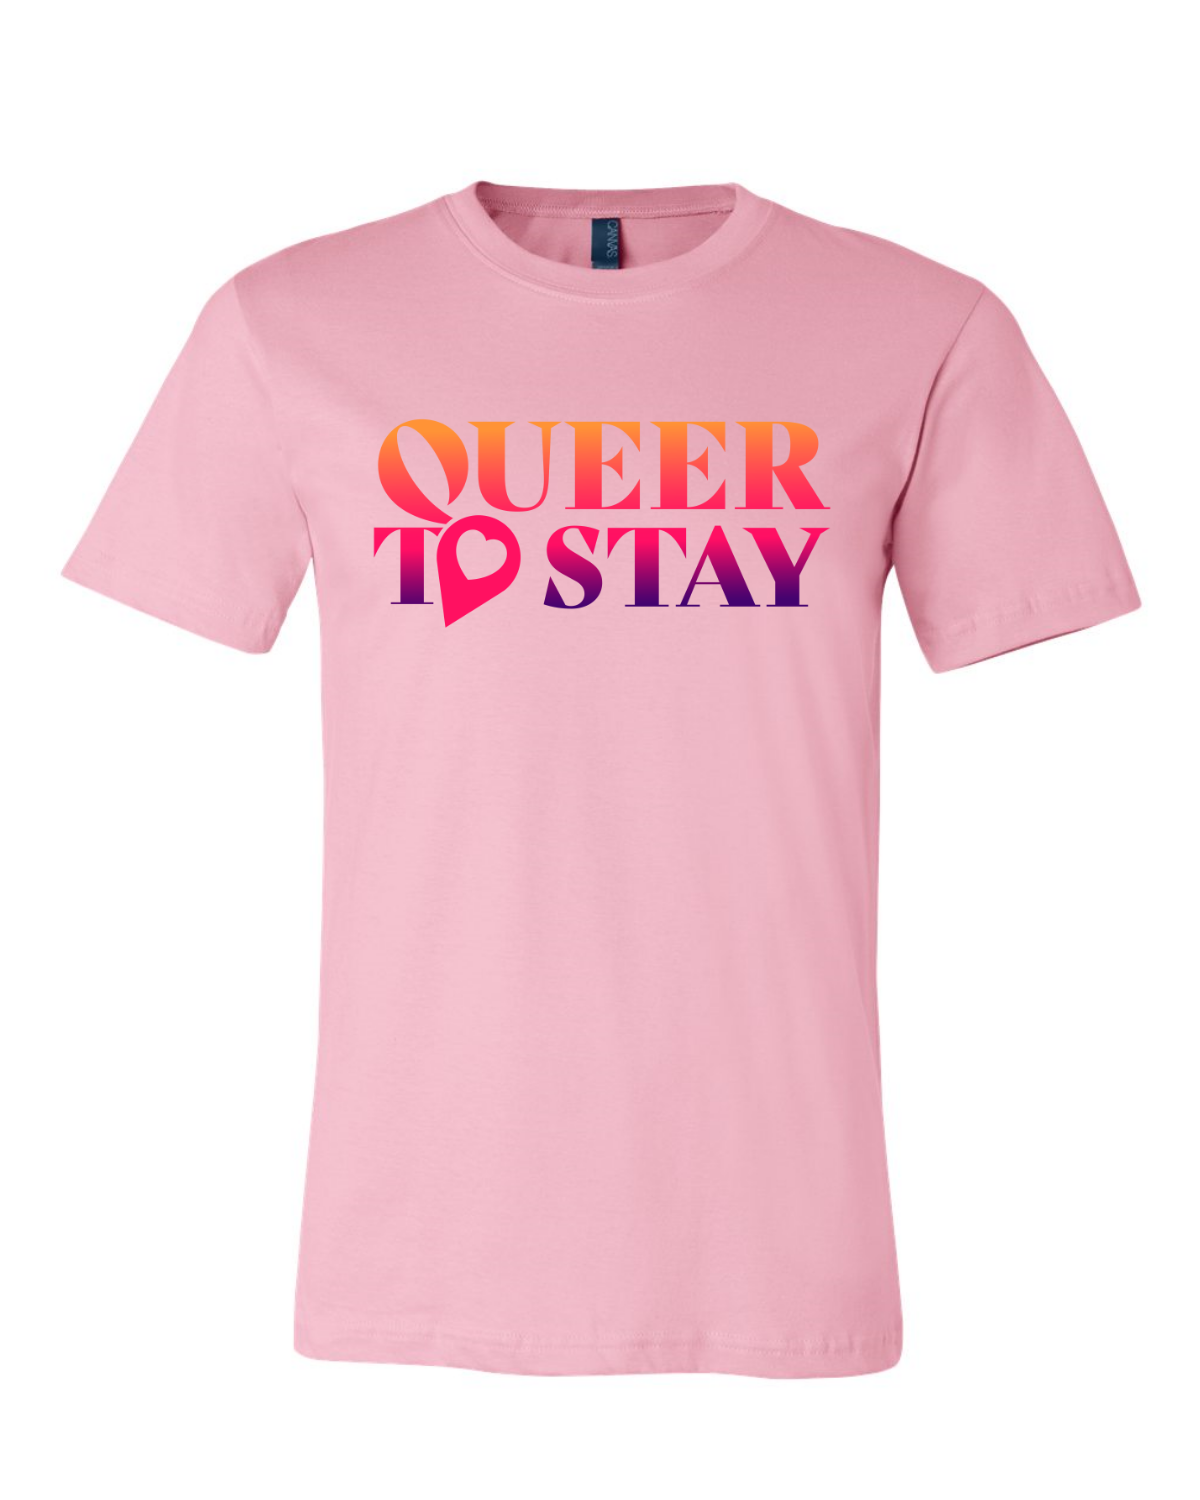 SHOWTIME Queer to Stay Adultos Camiseta de manga corta